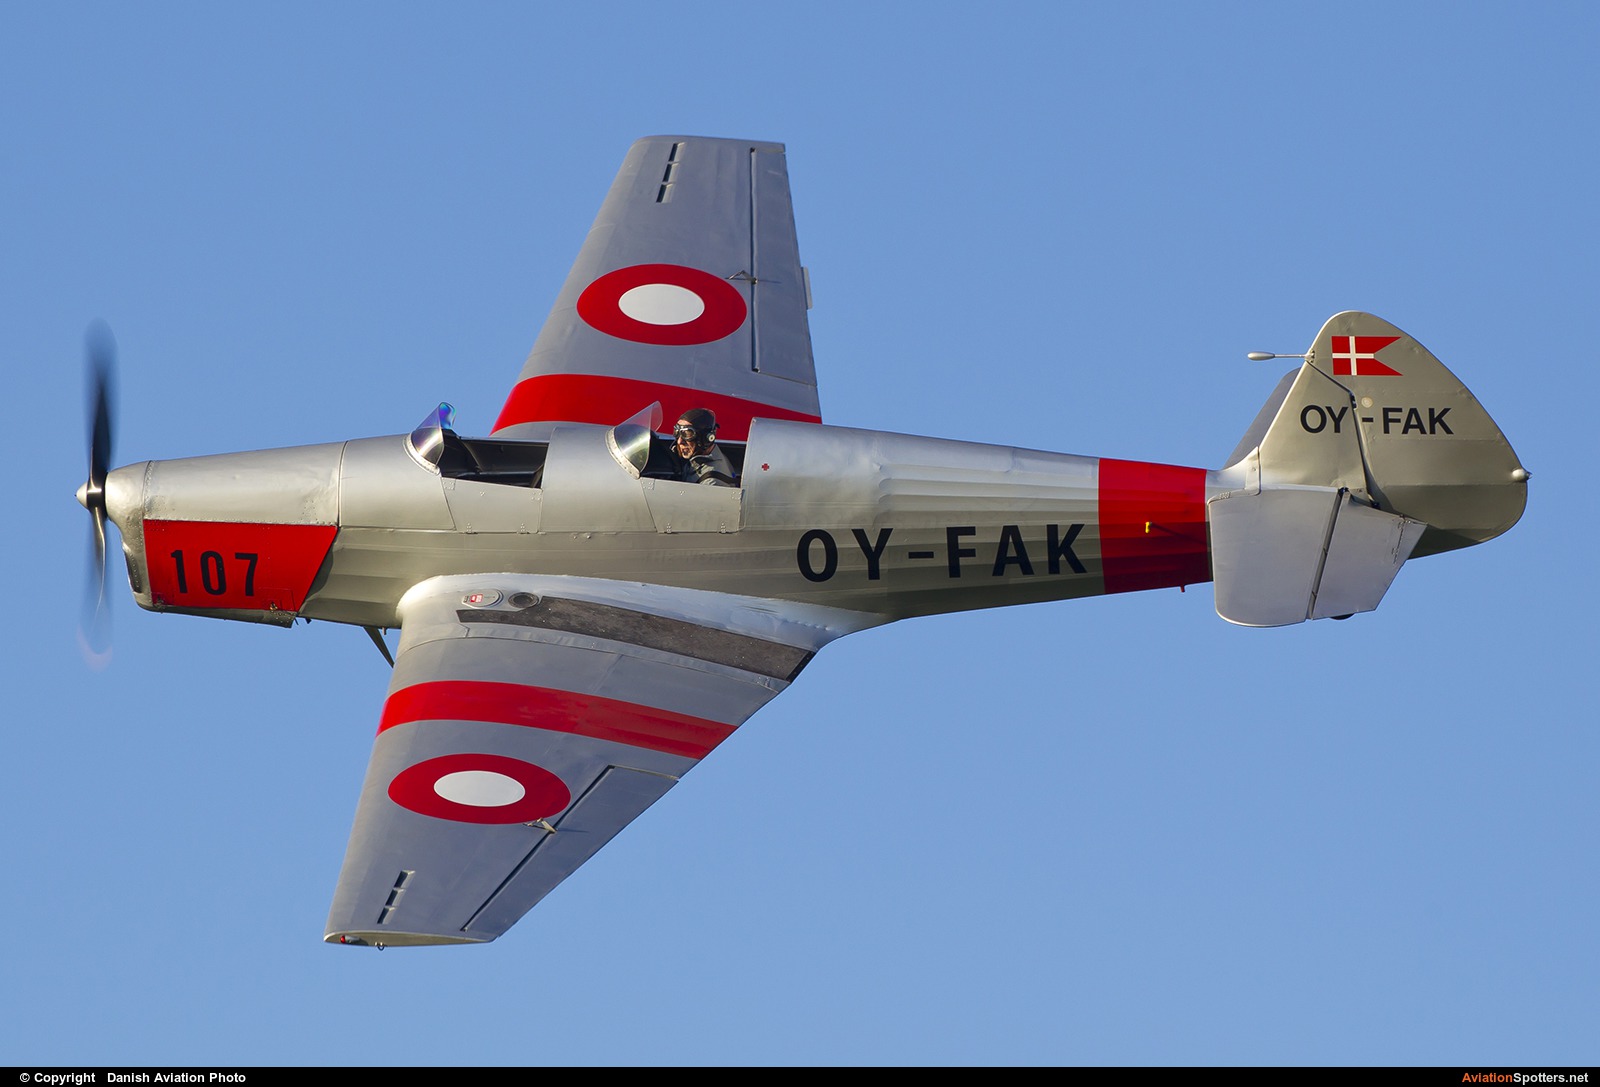   KZ VIII  (OY-FAK) By Danish Aviation Photo (Danish Aviation Photo)